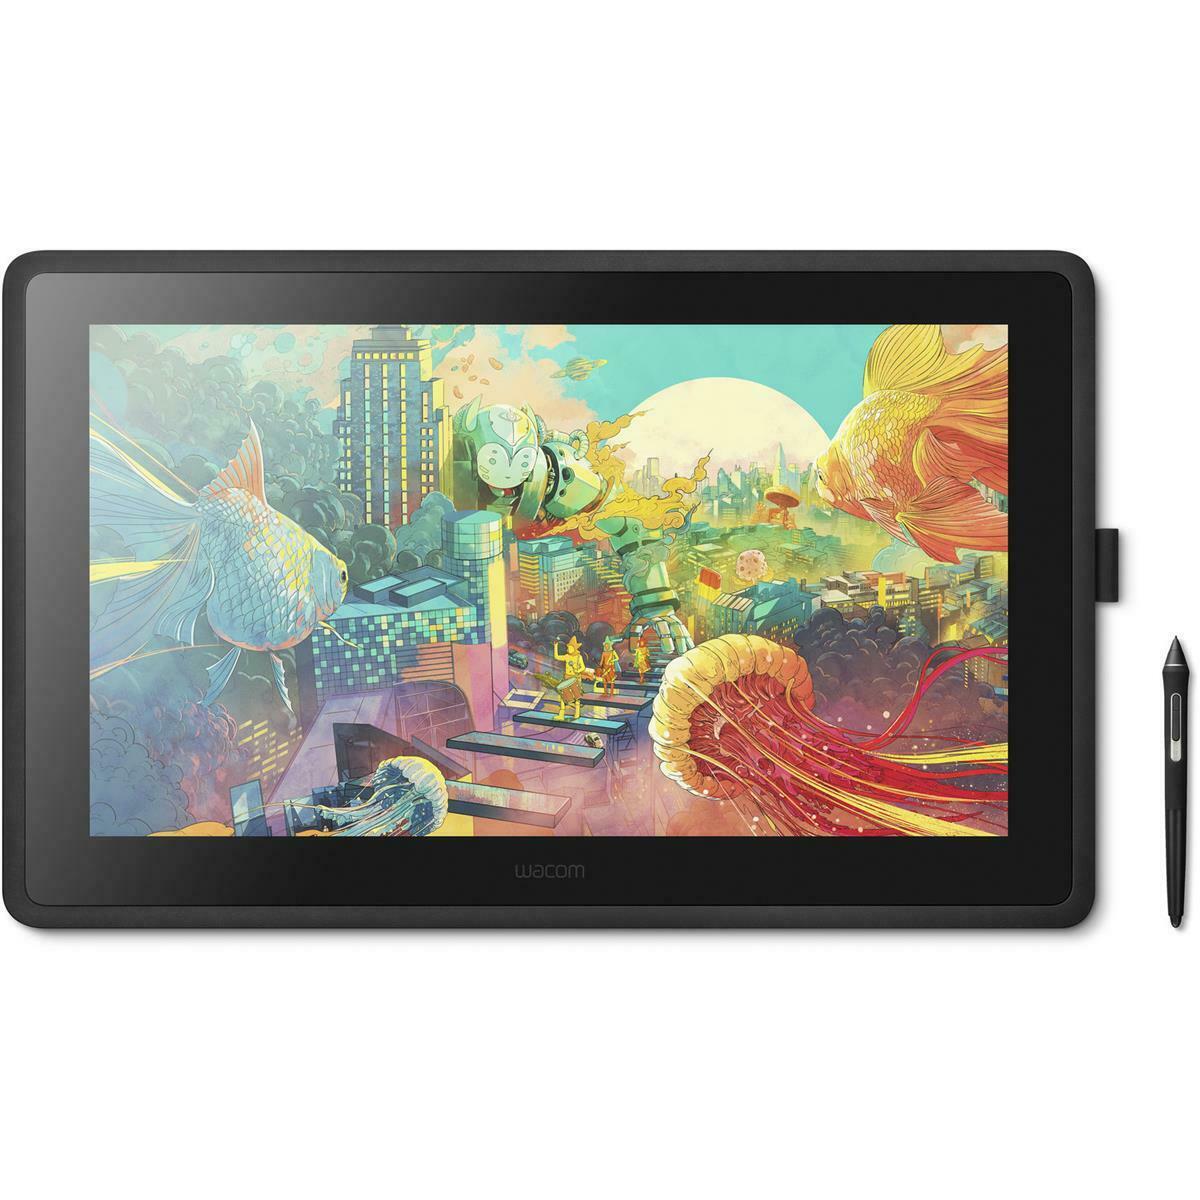 Wacom Cintiq 22 21.5" Full HD IPS Creative Pen Touchscreen Display, Black